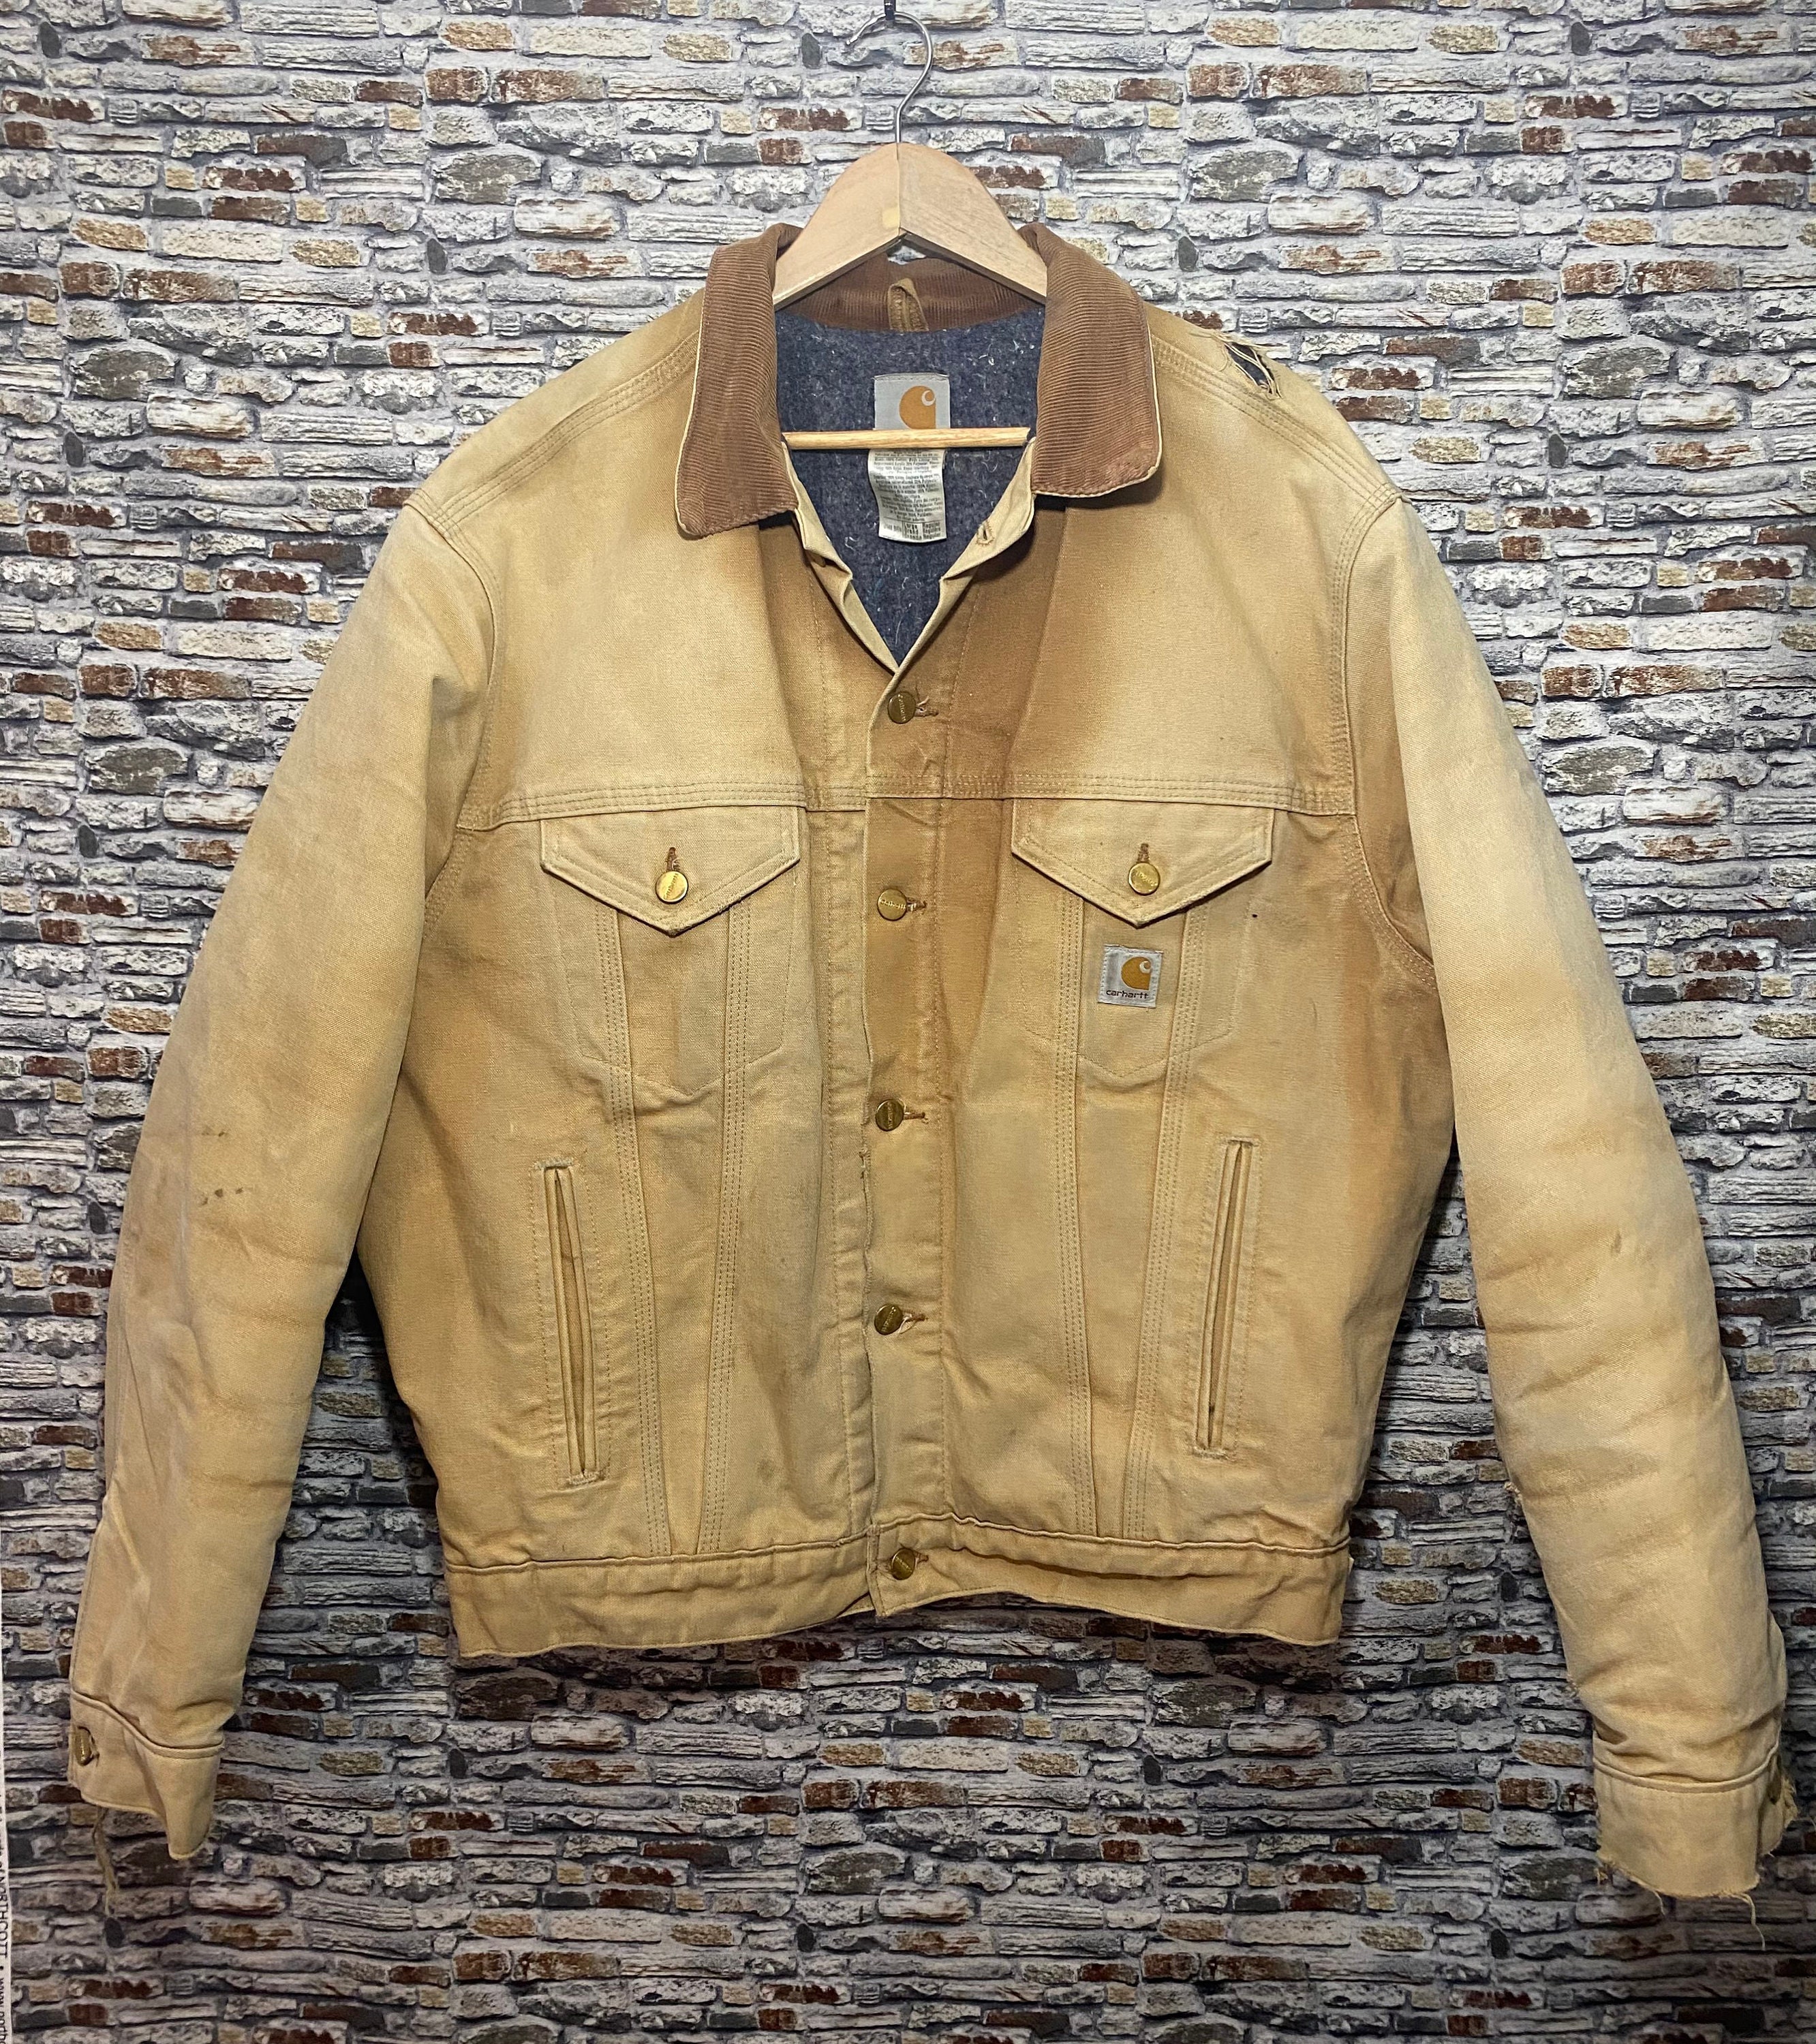 Carhartt Trucker Jacket 90s Vintage Made in U.S.A Blanket | Etsy